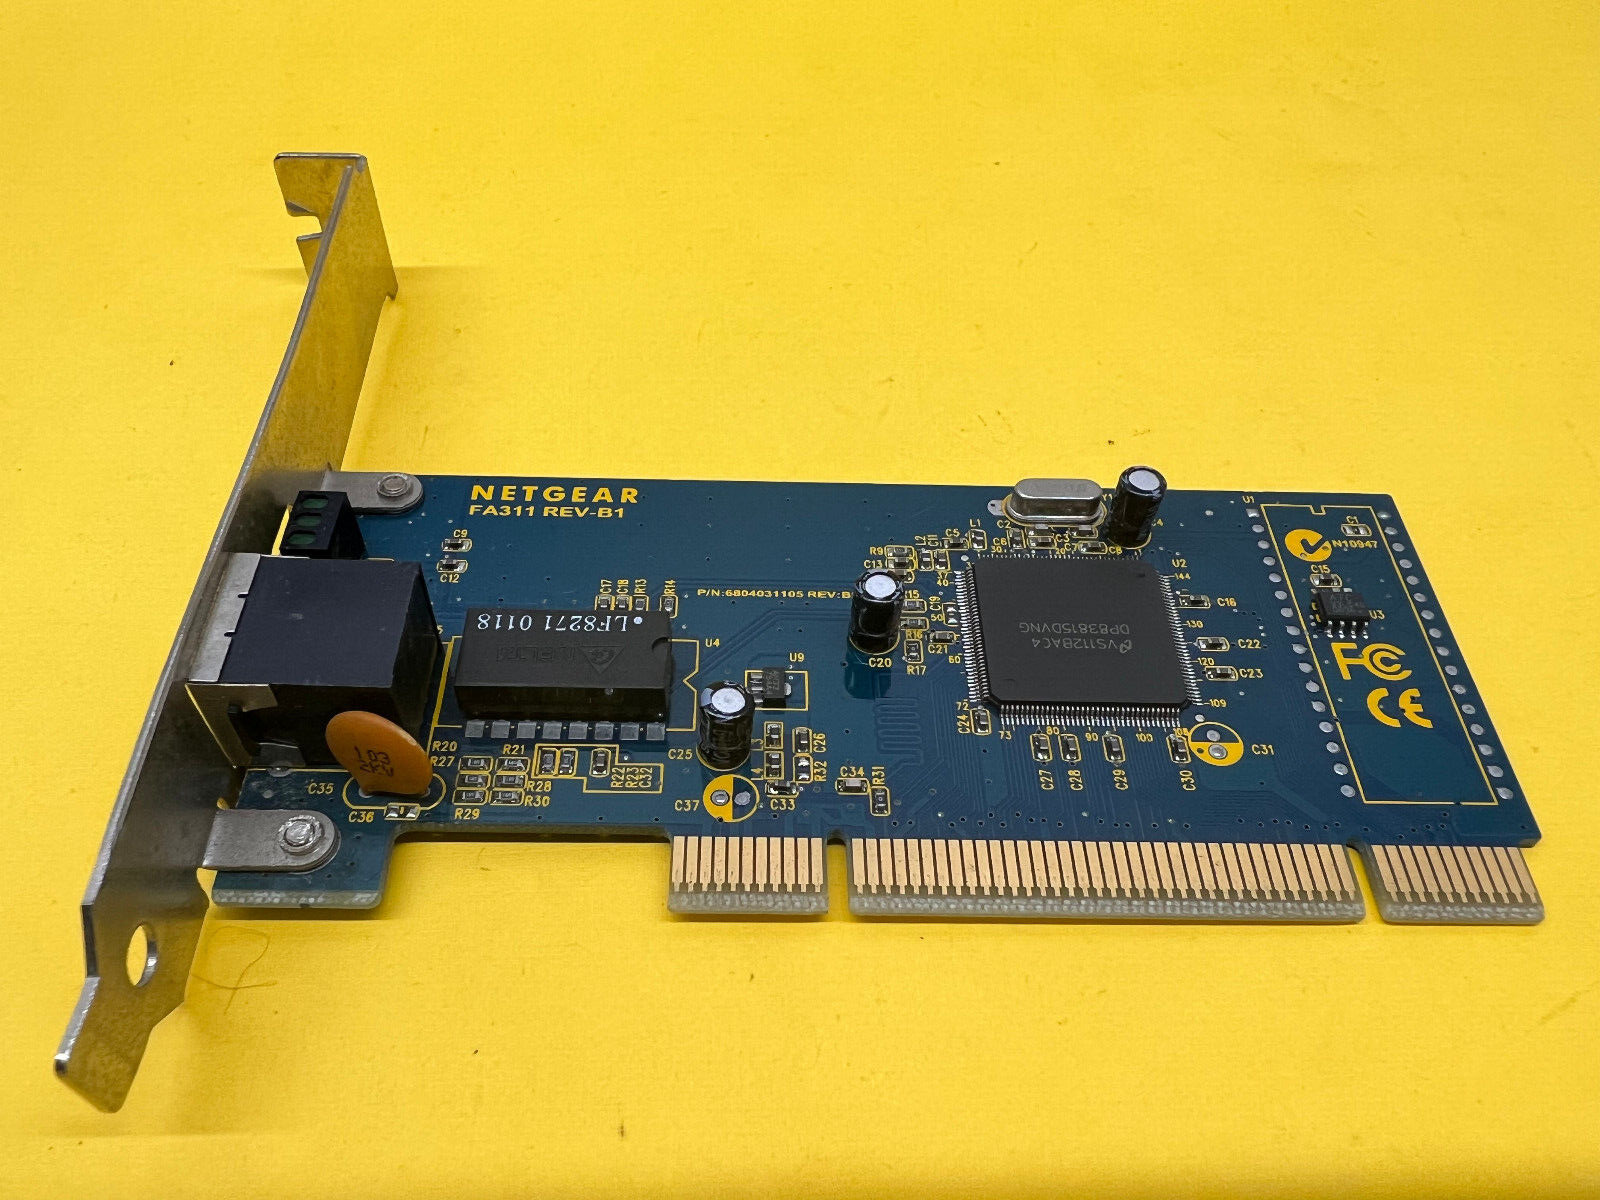 Netgear FA311 Rev-B1 PCI Network Interface Card 